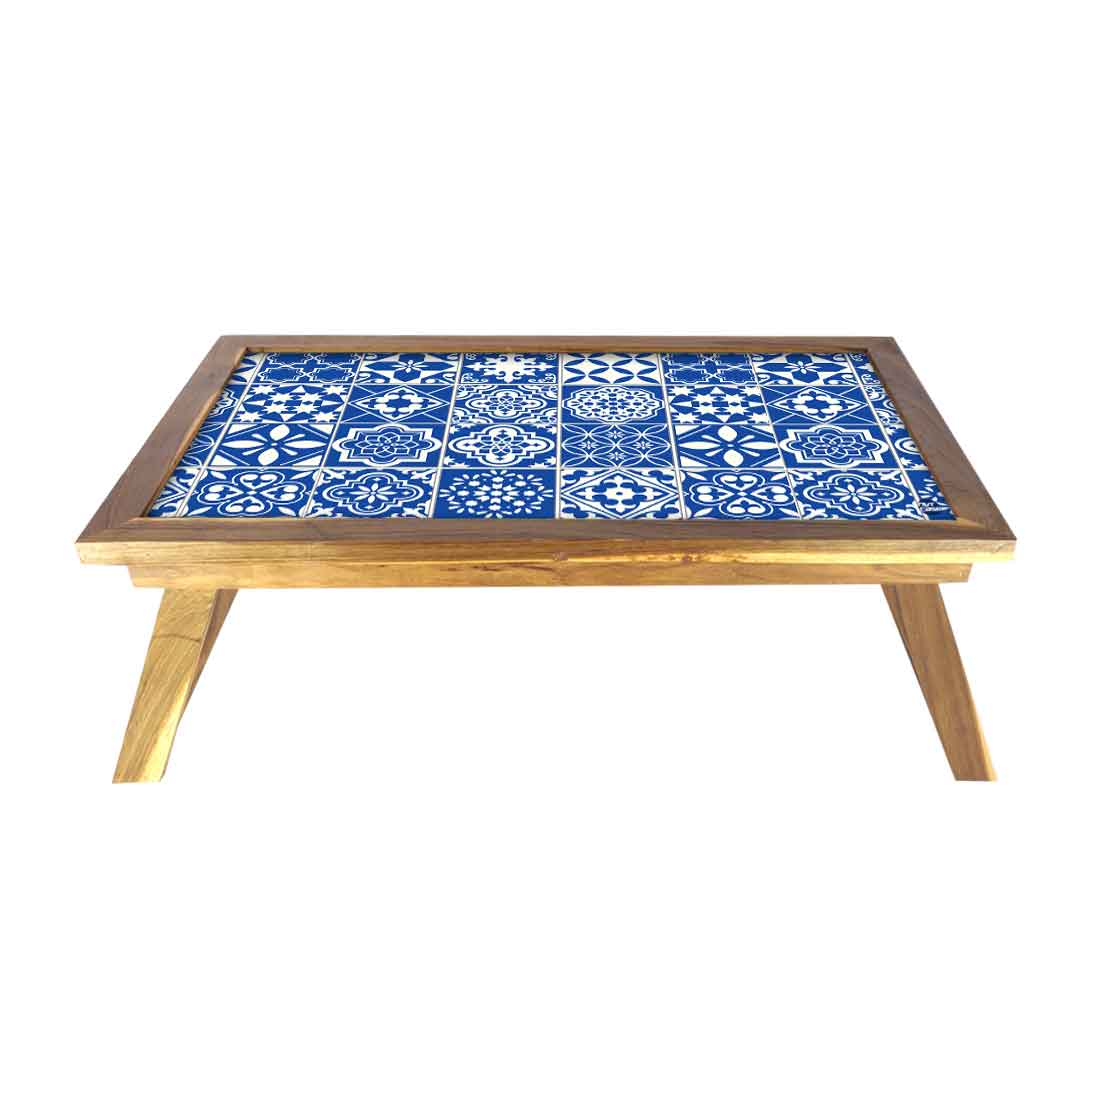 Designer Lapdesk Breakfast in Bed Desk Foldable Wooden Study Desk - Azulejo Nutcase